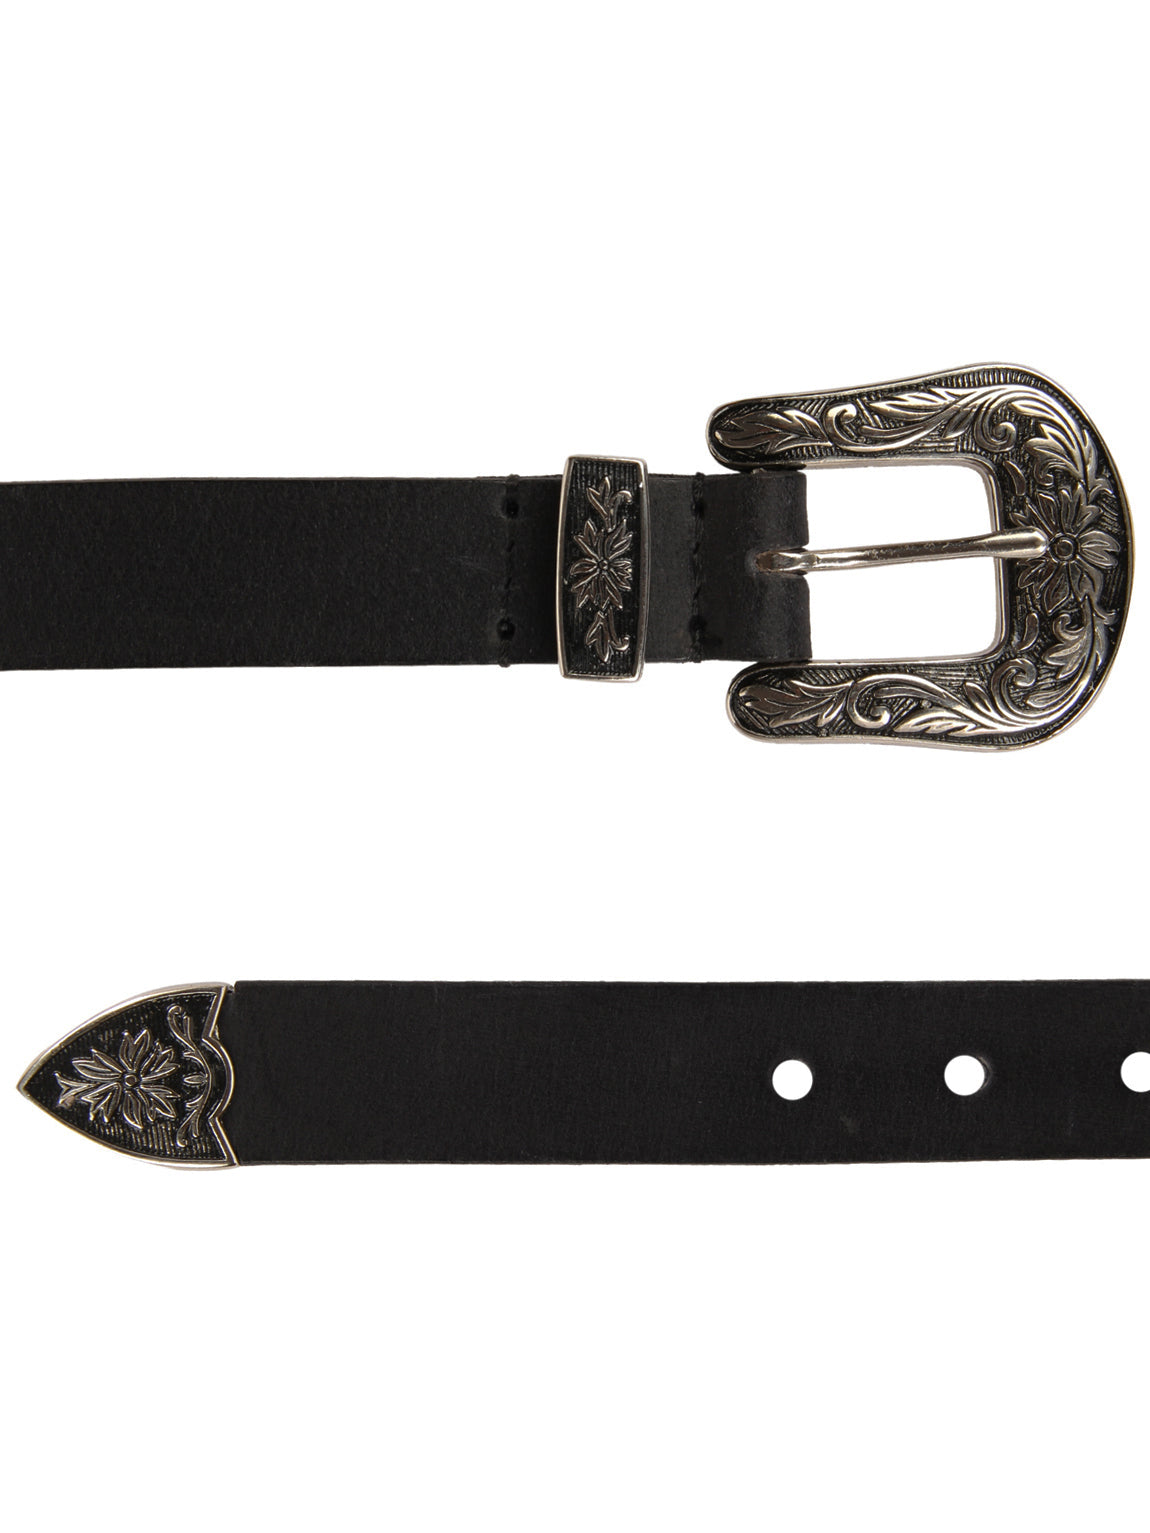 Black cowboy belt